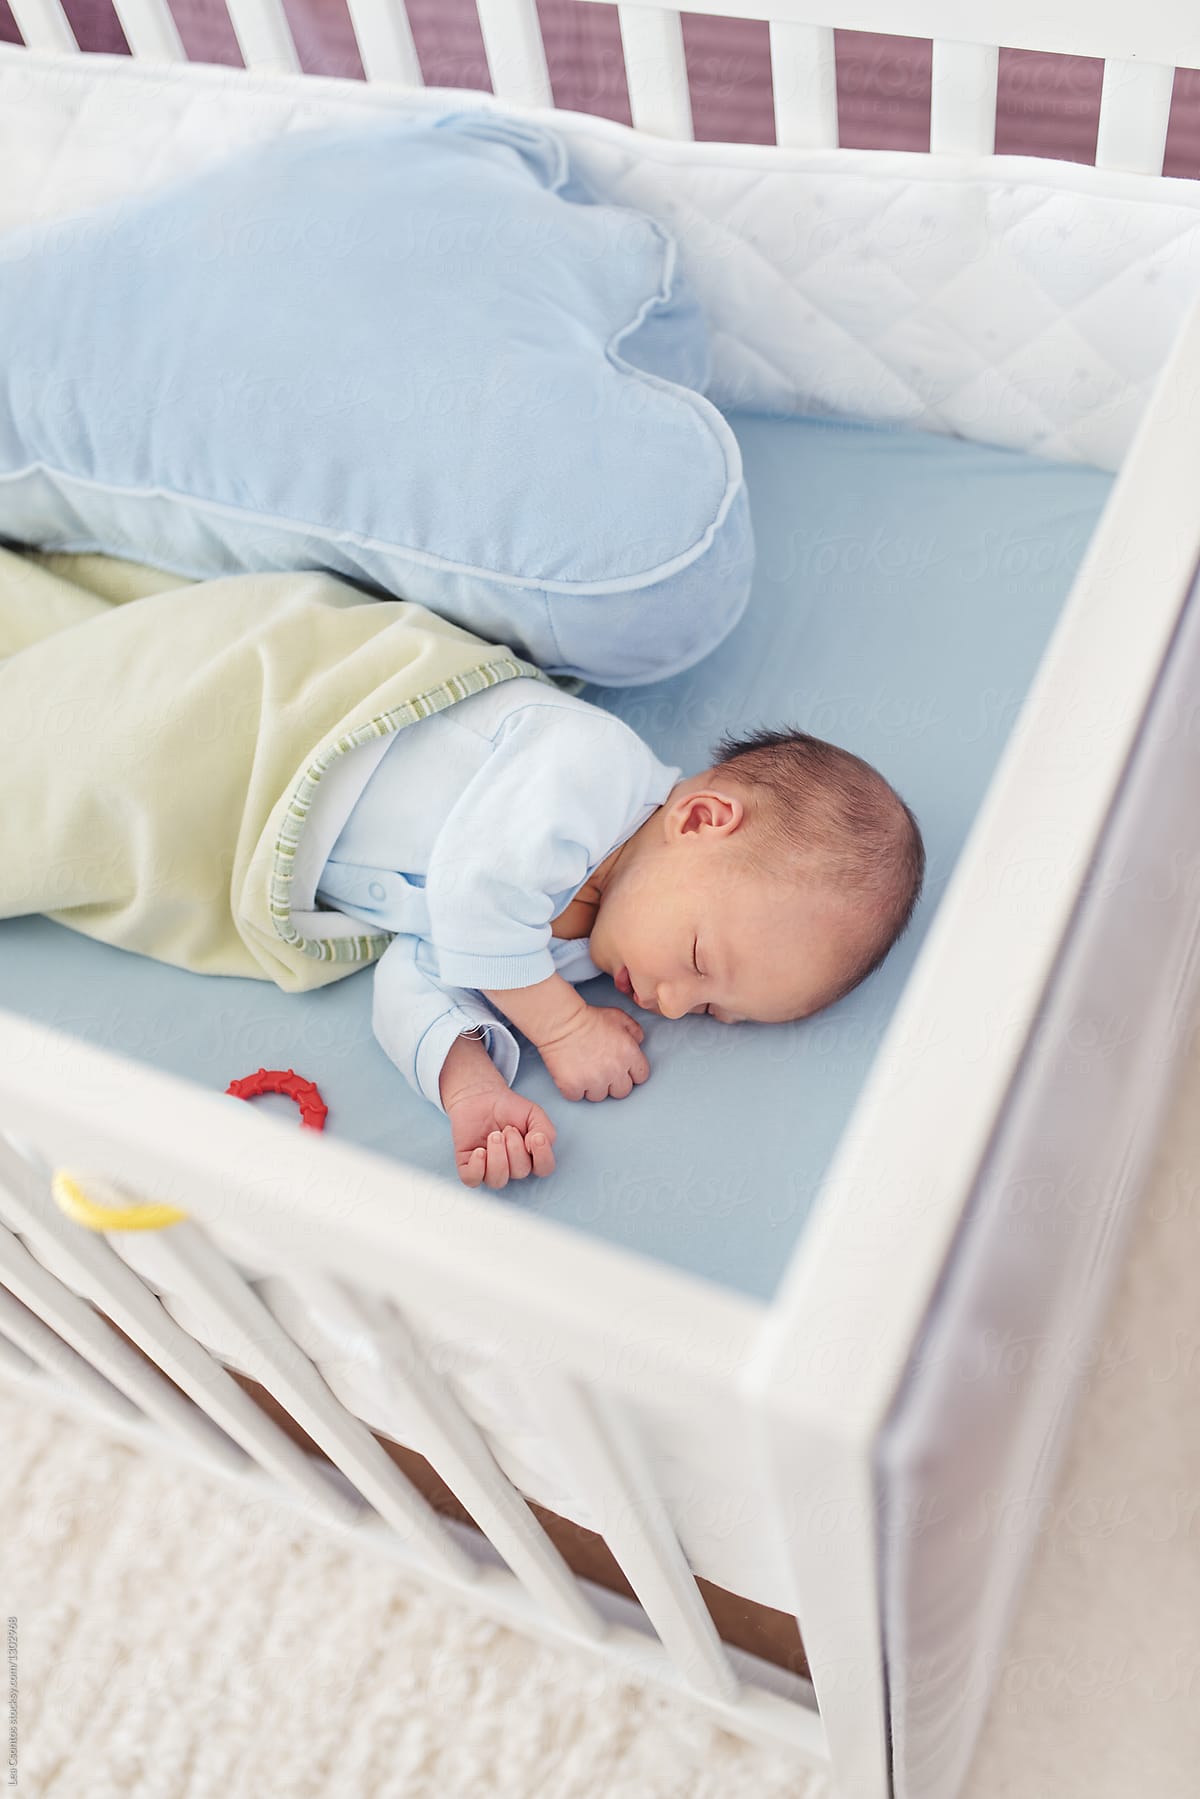 Newborn baby sleeping in a white crib